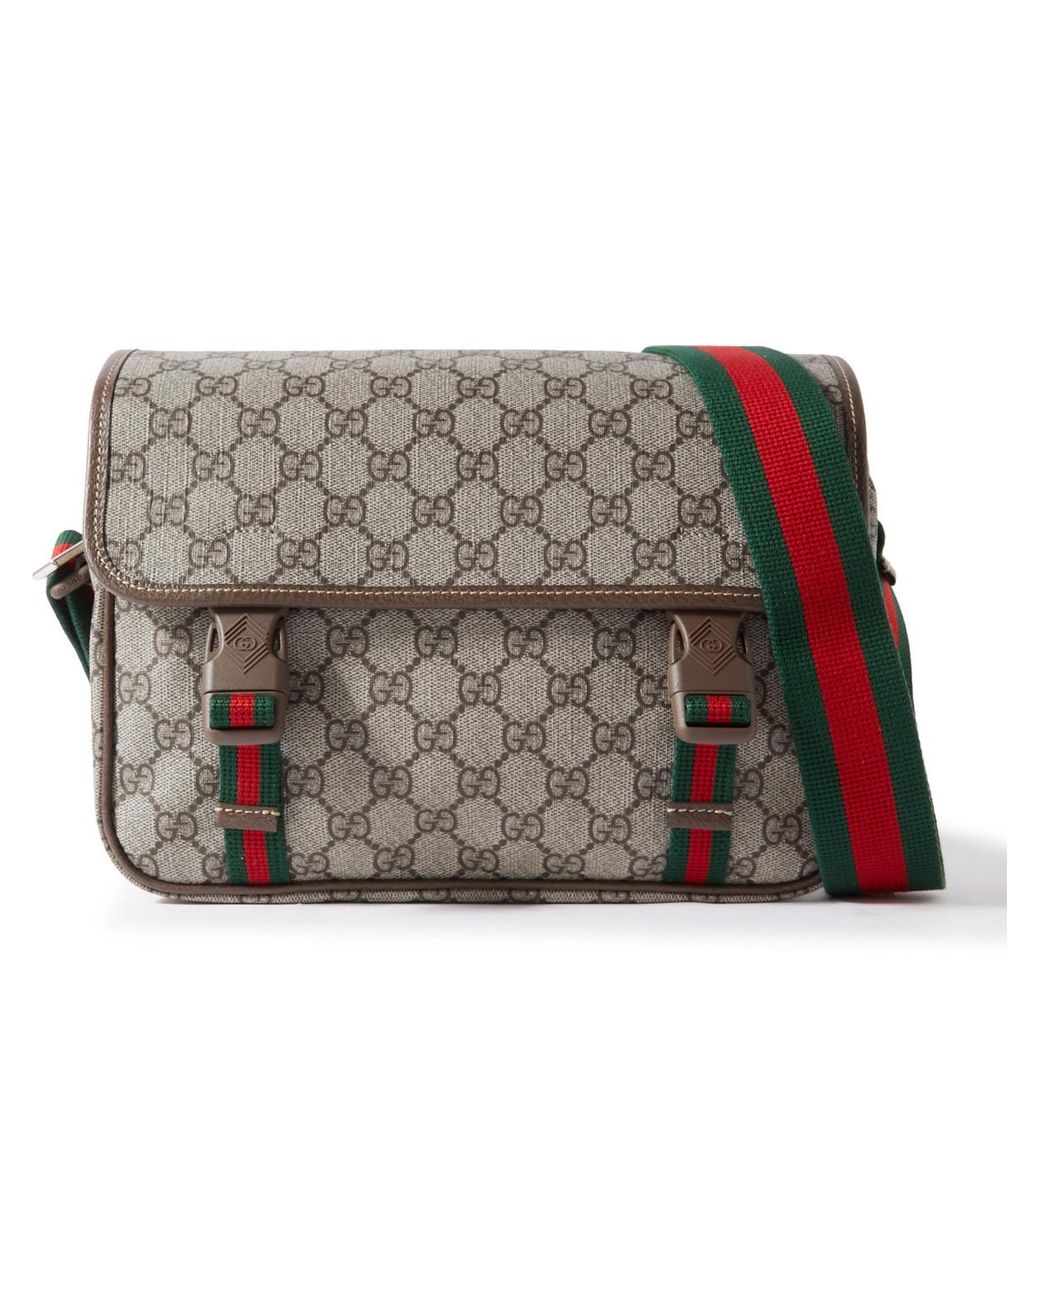 Gucci Brown GG Supreme Canvas Messenger Bag